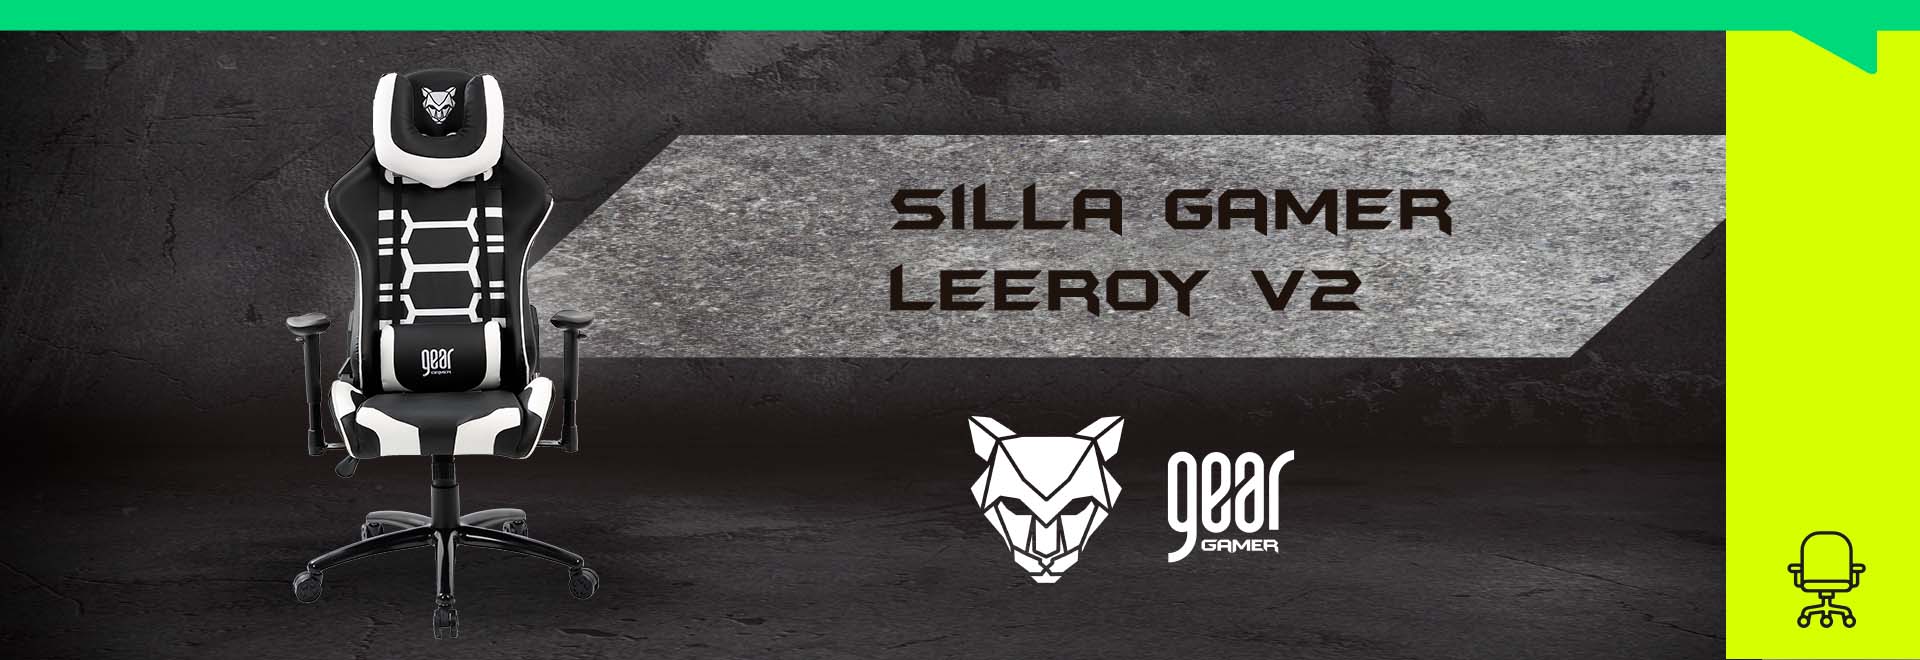 sillas-gear-gamer-leeroy